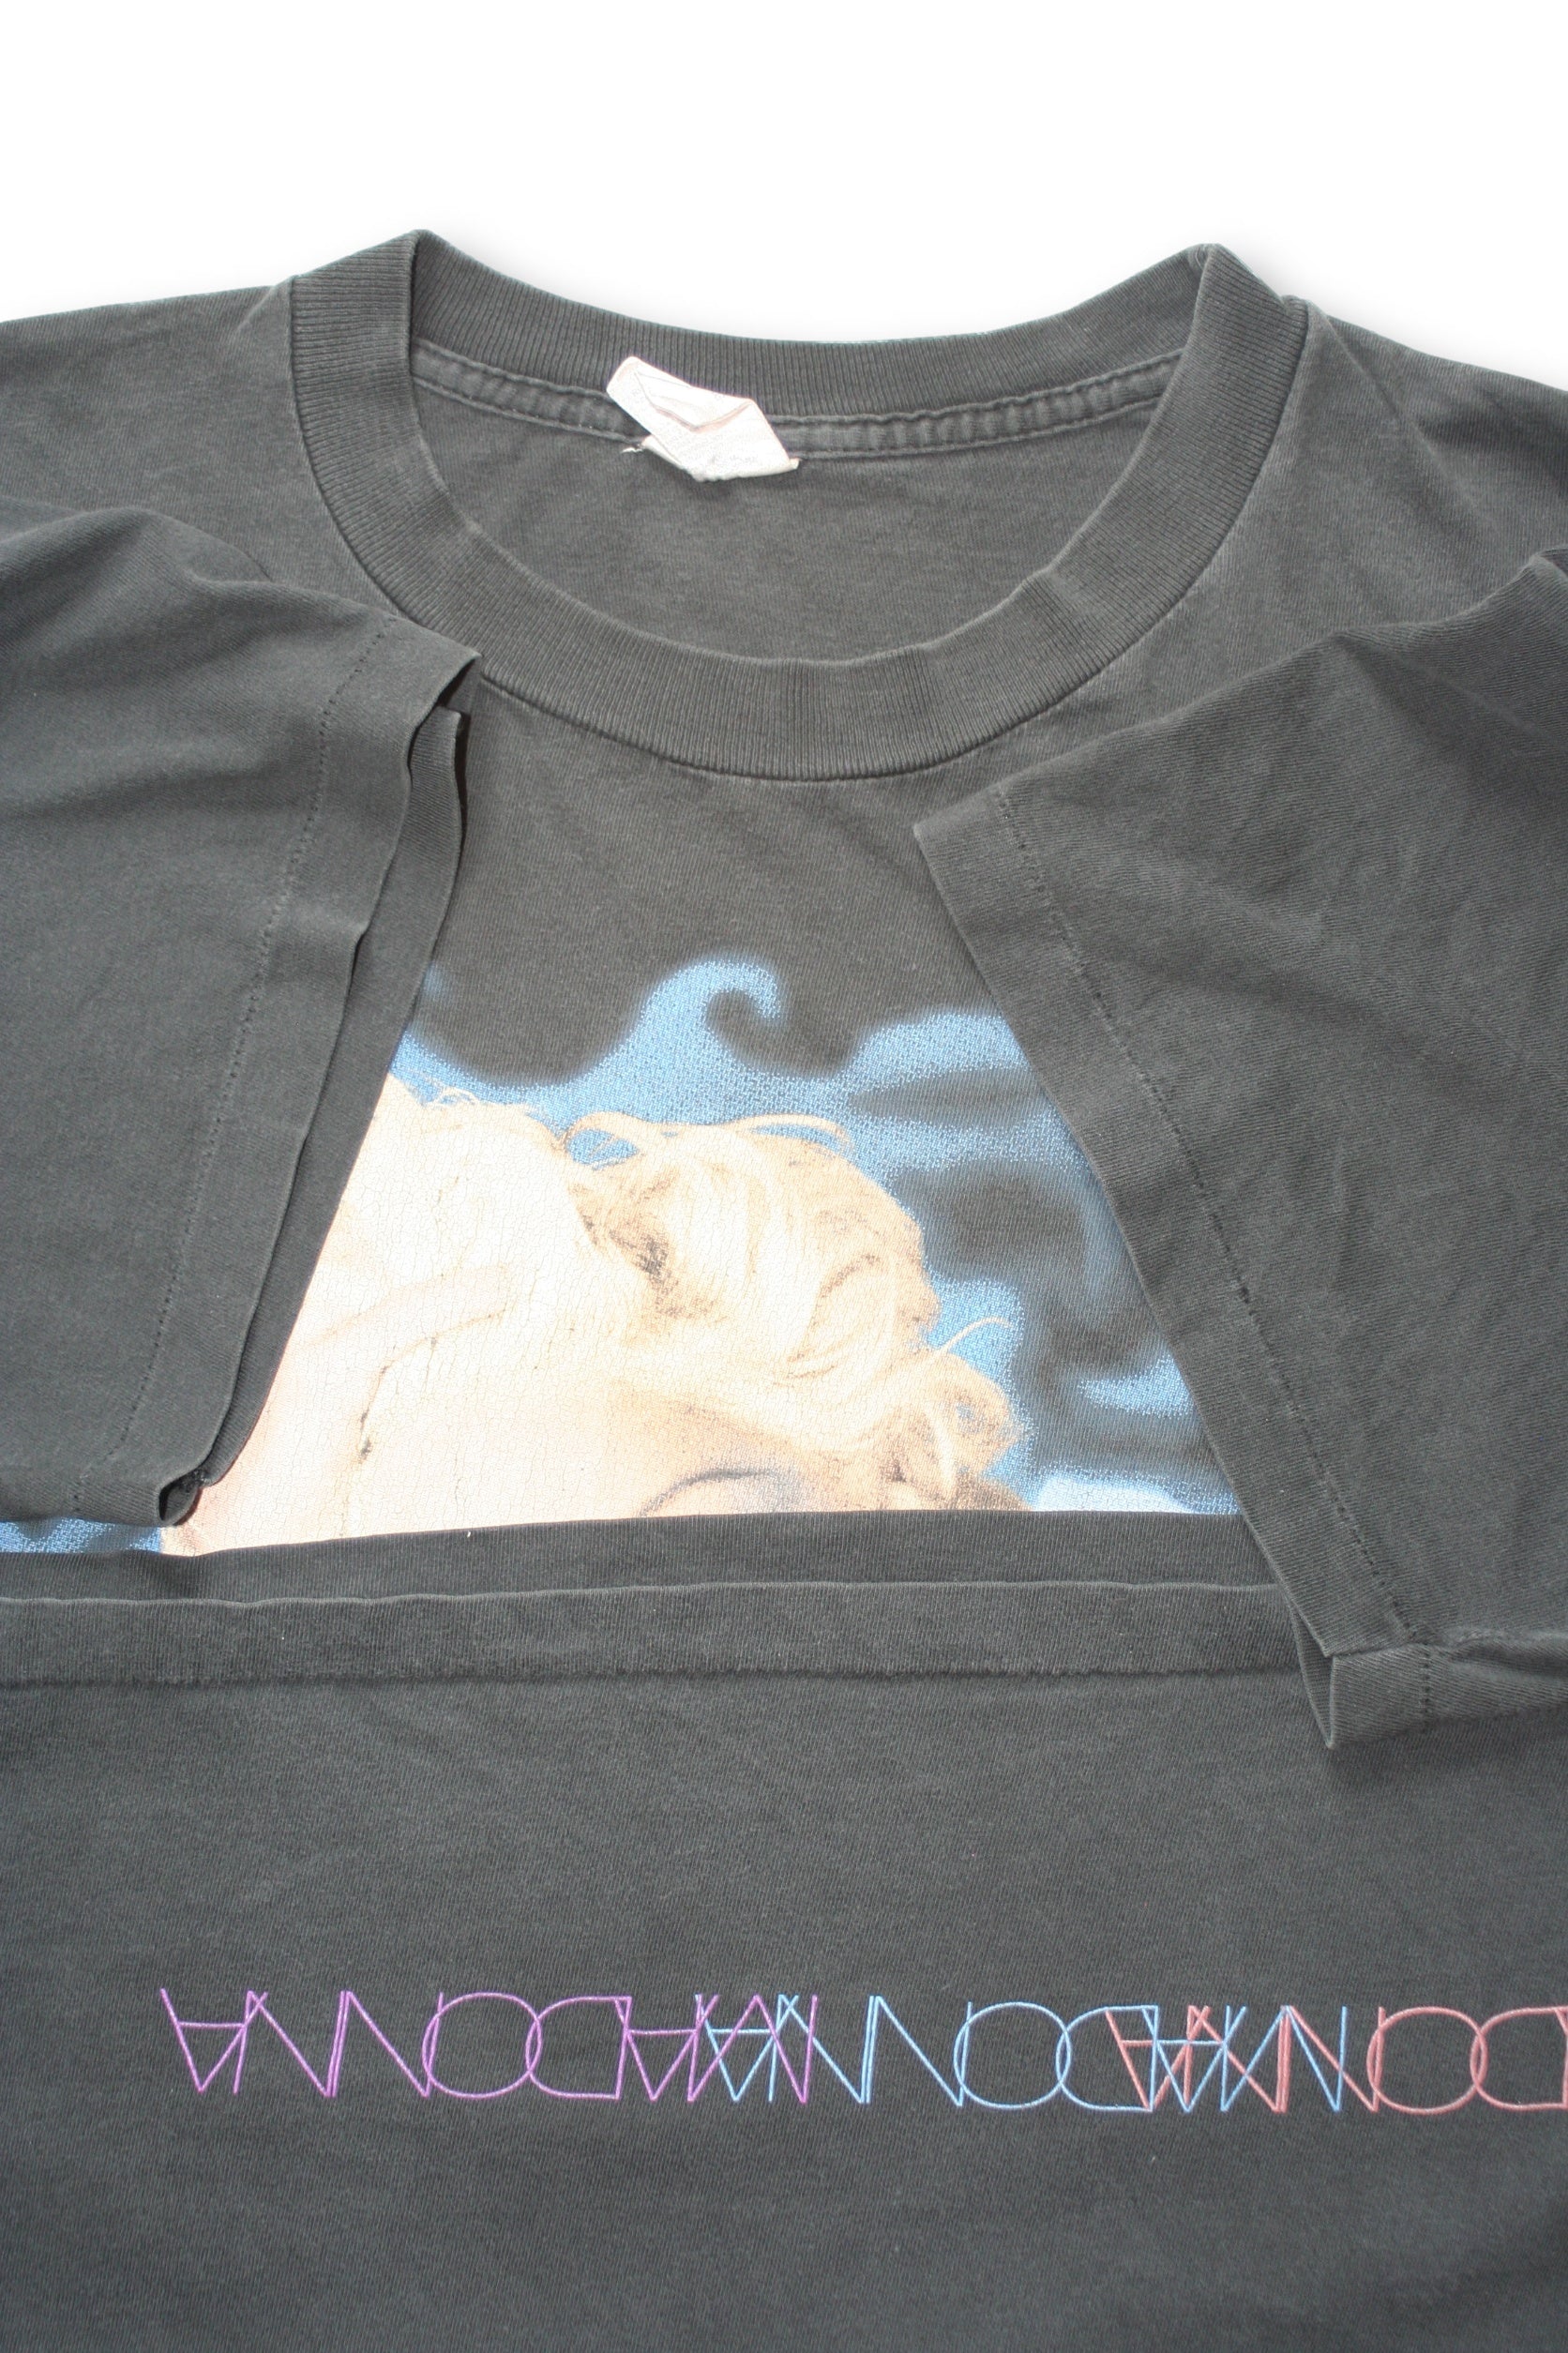 Vintage 1994 Madonna T-Shirt - XL